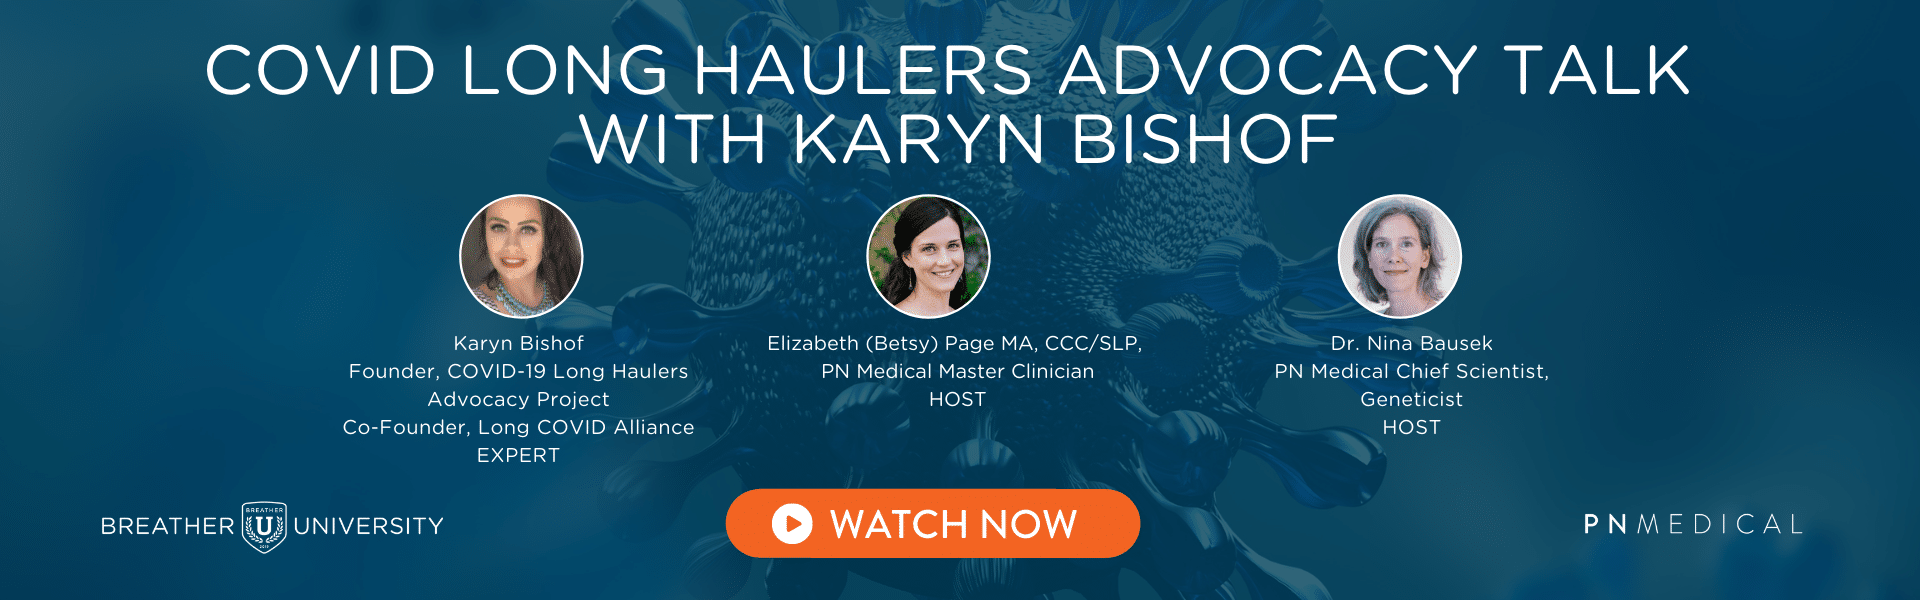 COVID Long Haulers Advocacy Talk with Karyn Bishof - Web